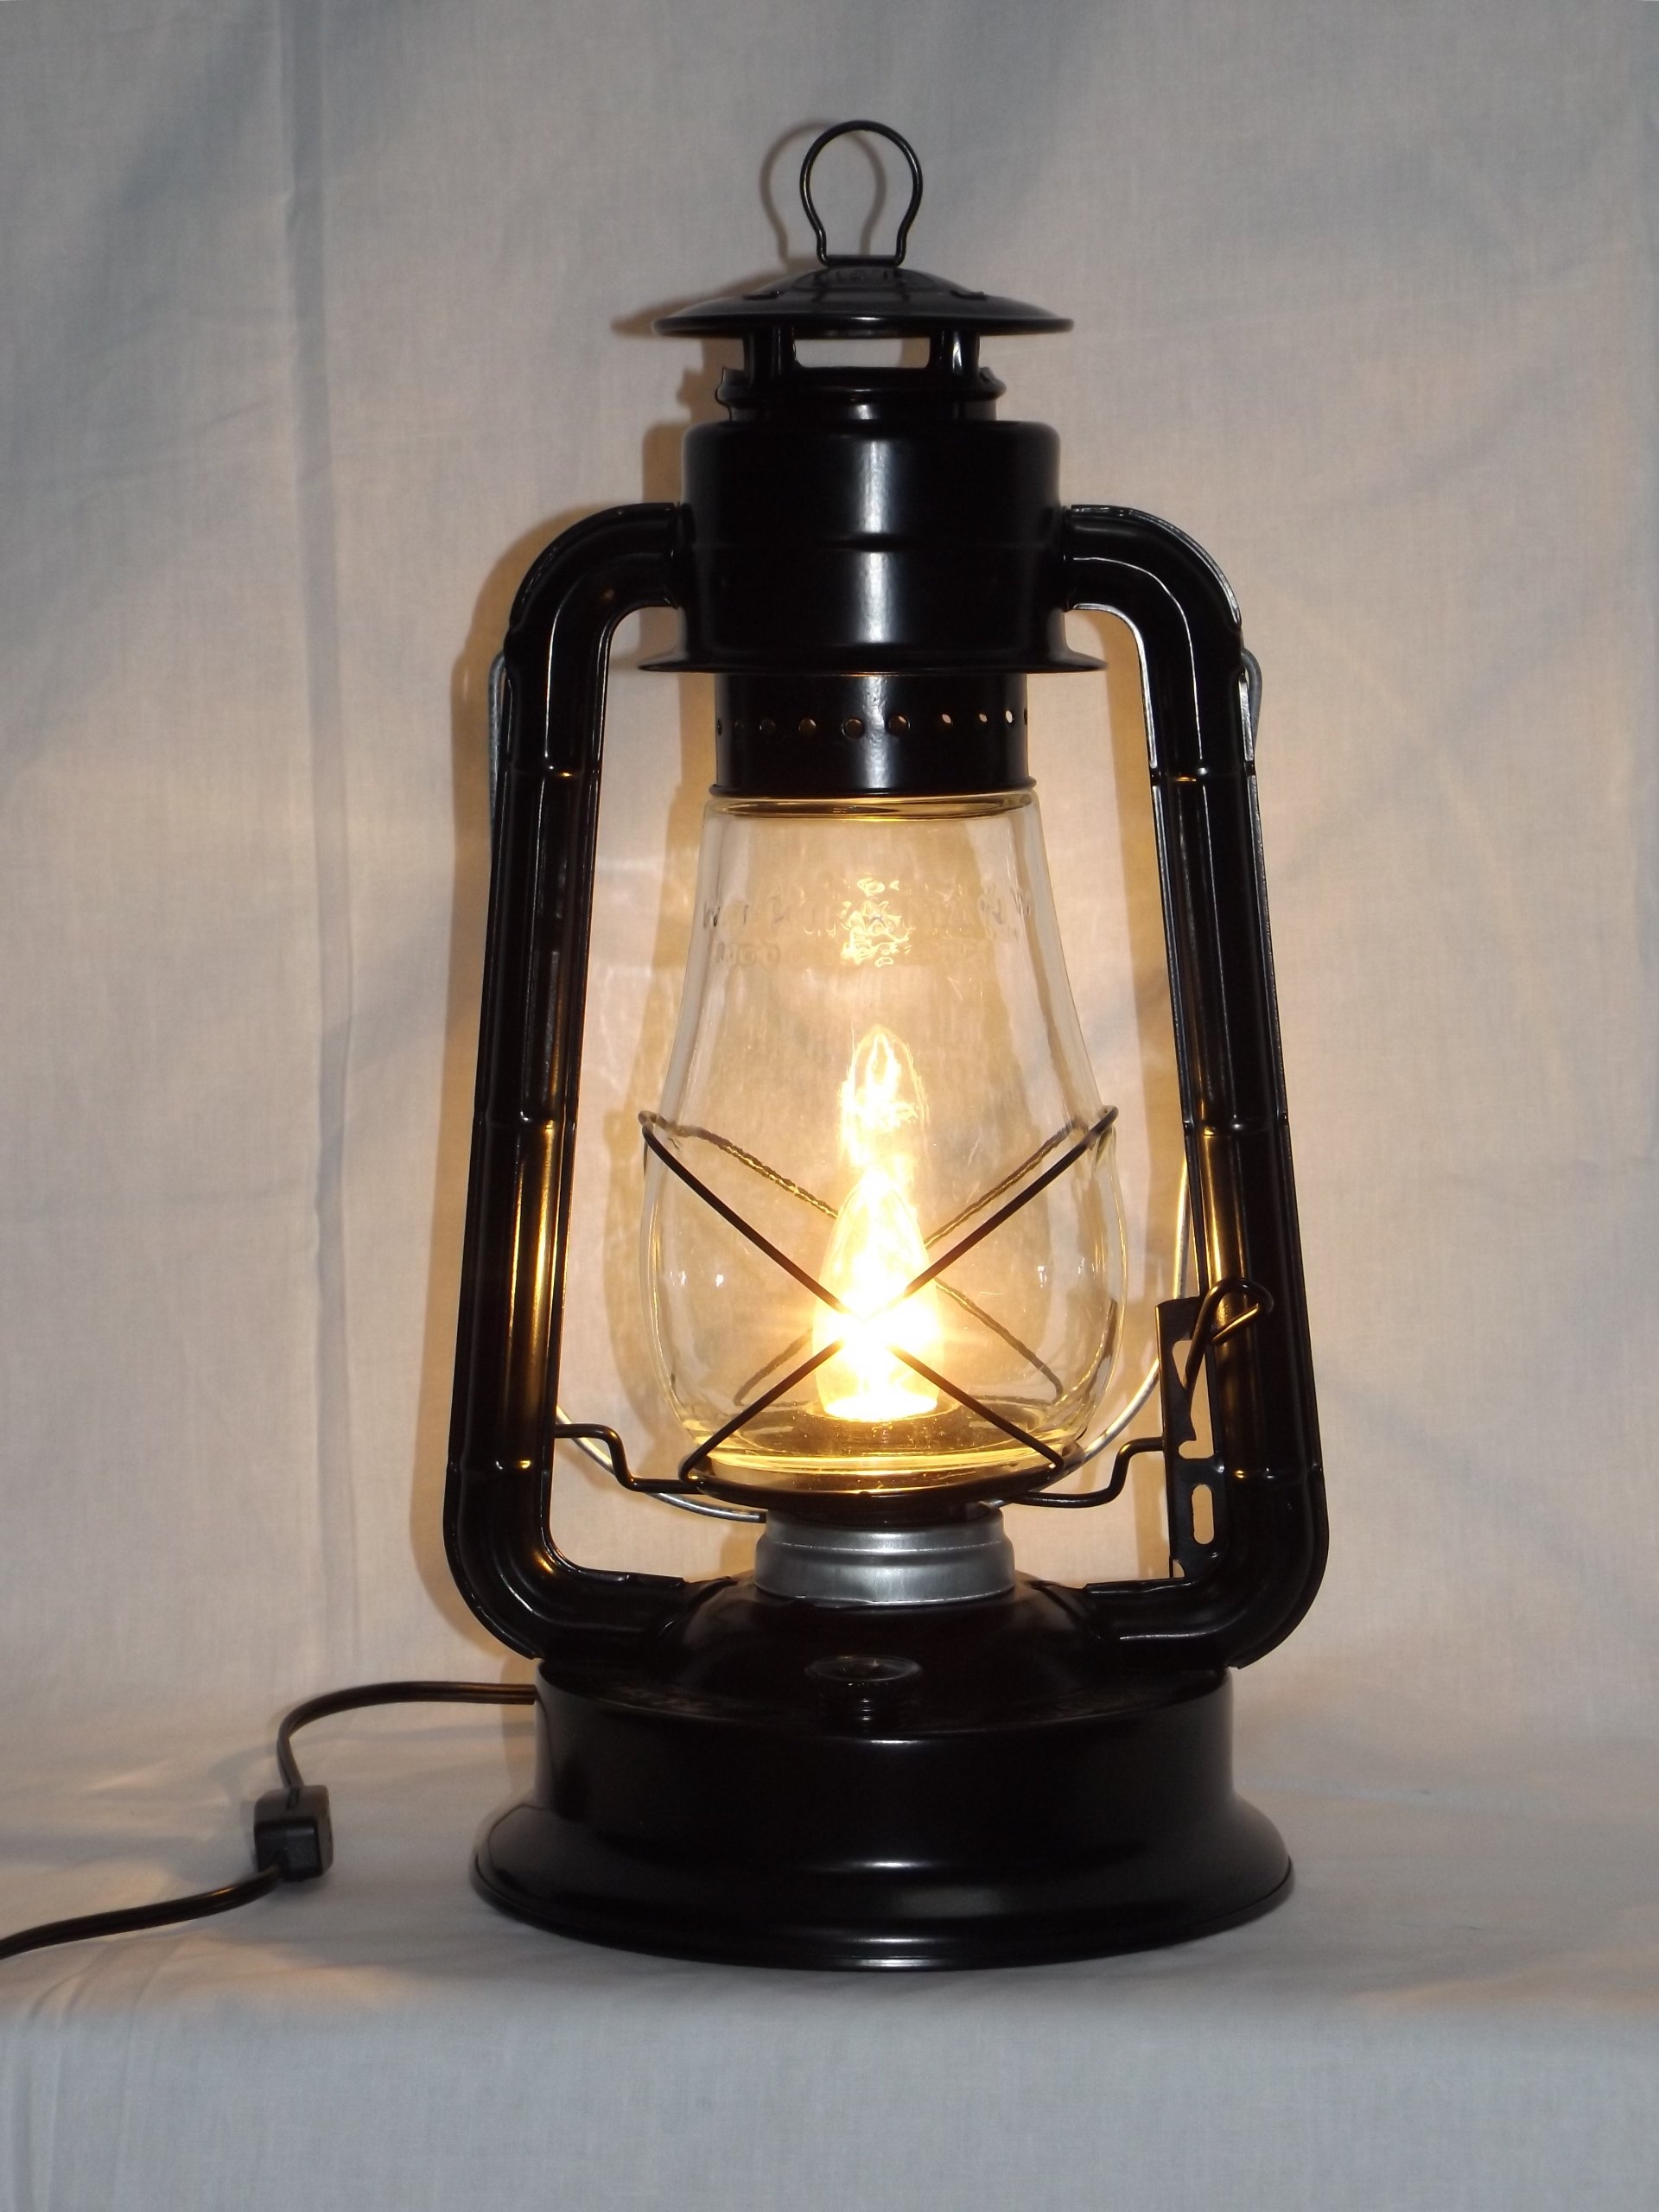 Electric lantern table lamps 17